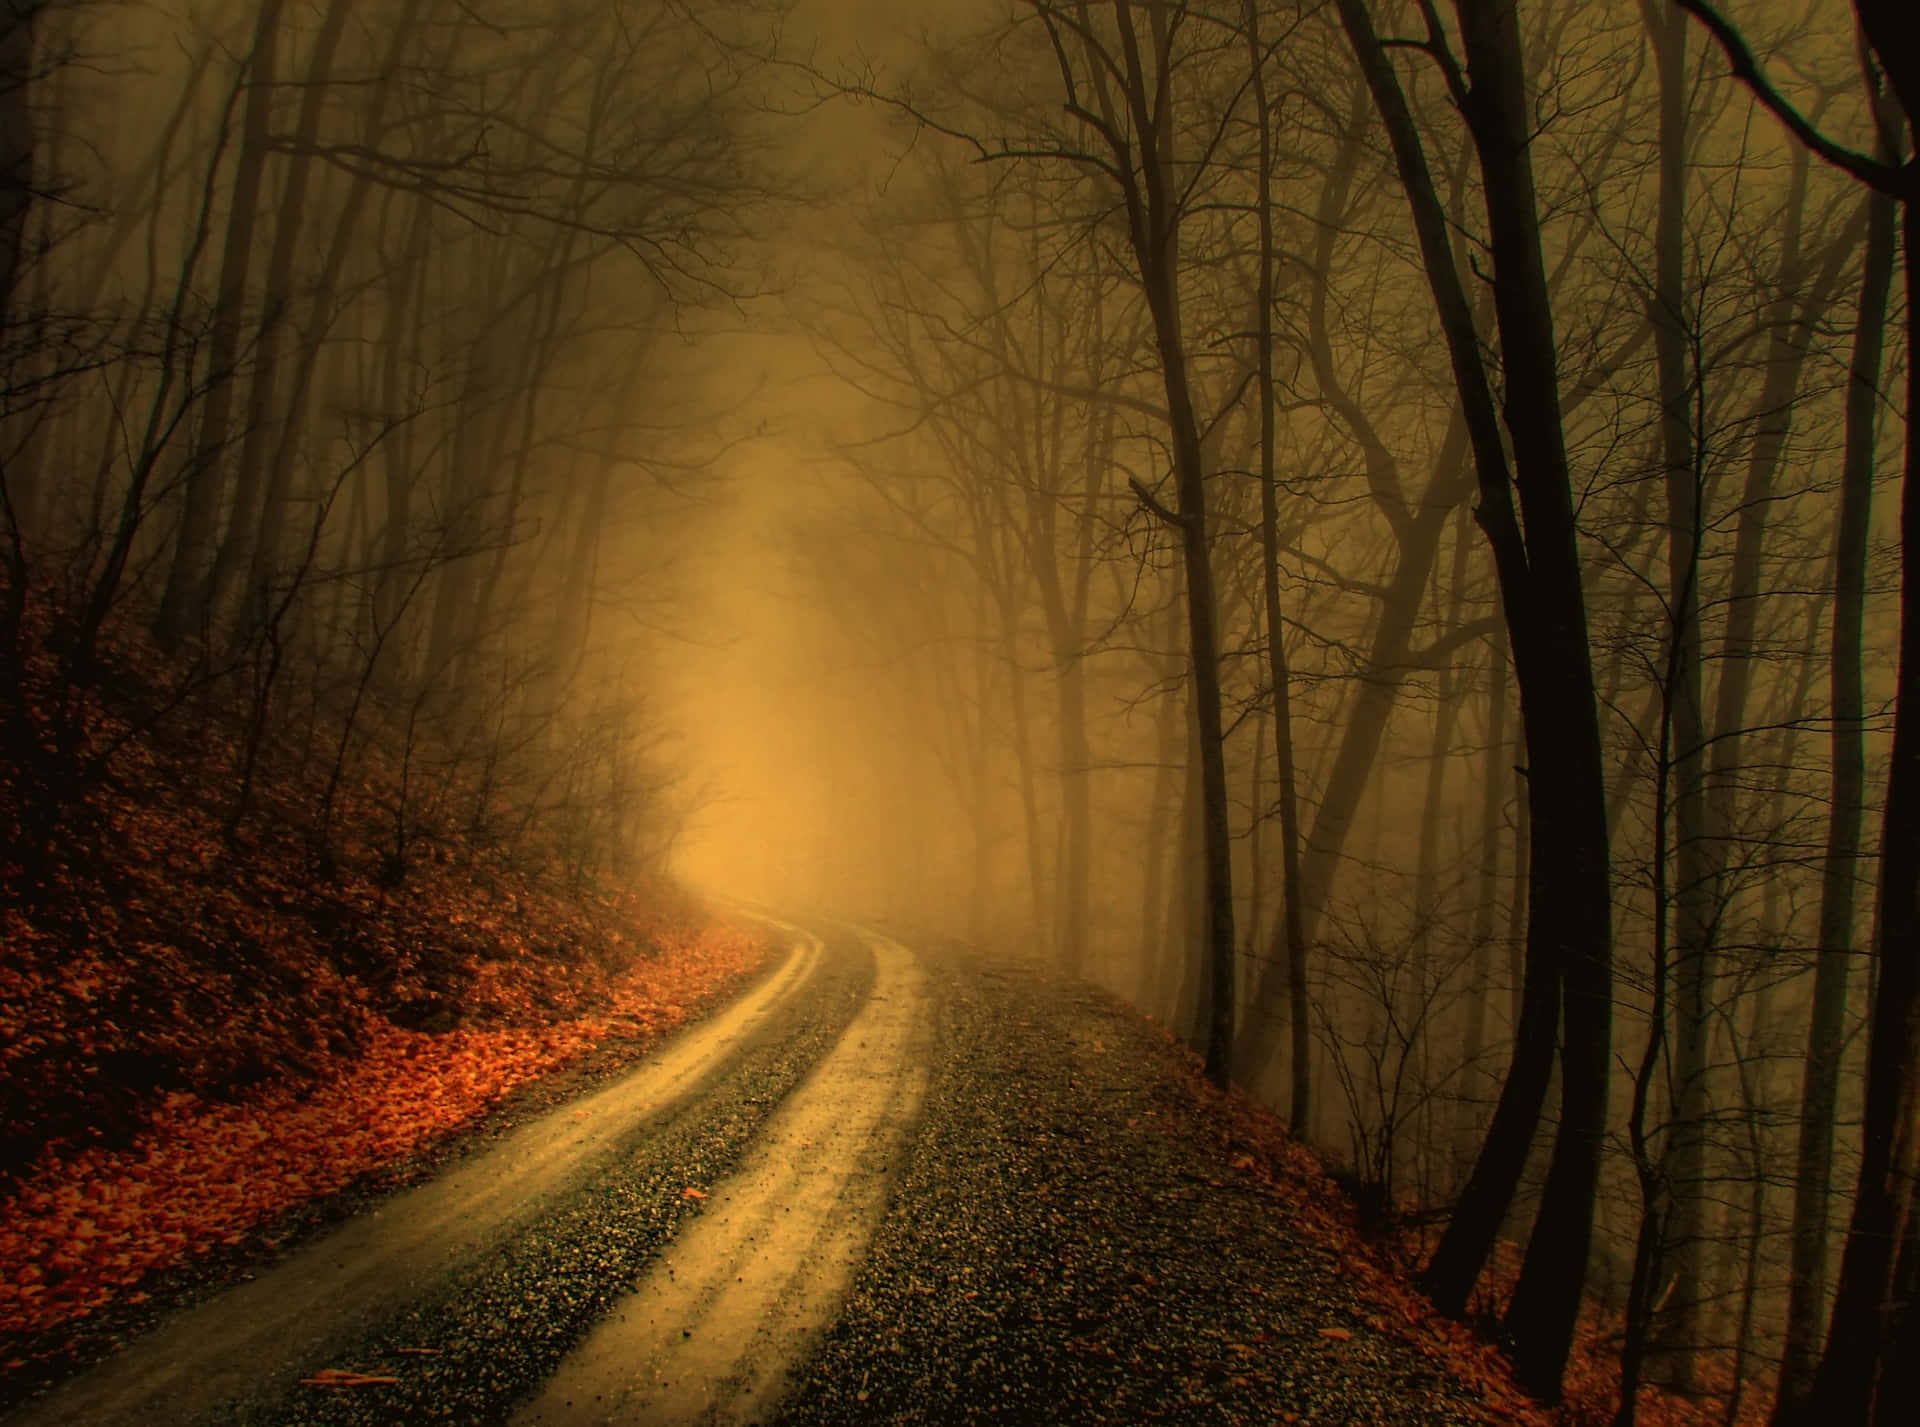 "Blanket of mist, a mystical morning fog"